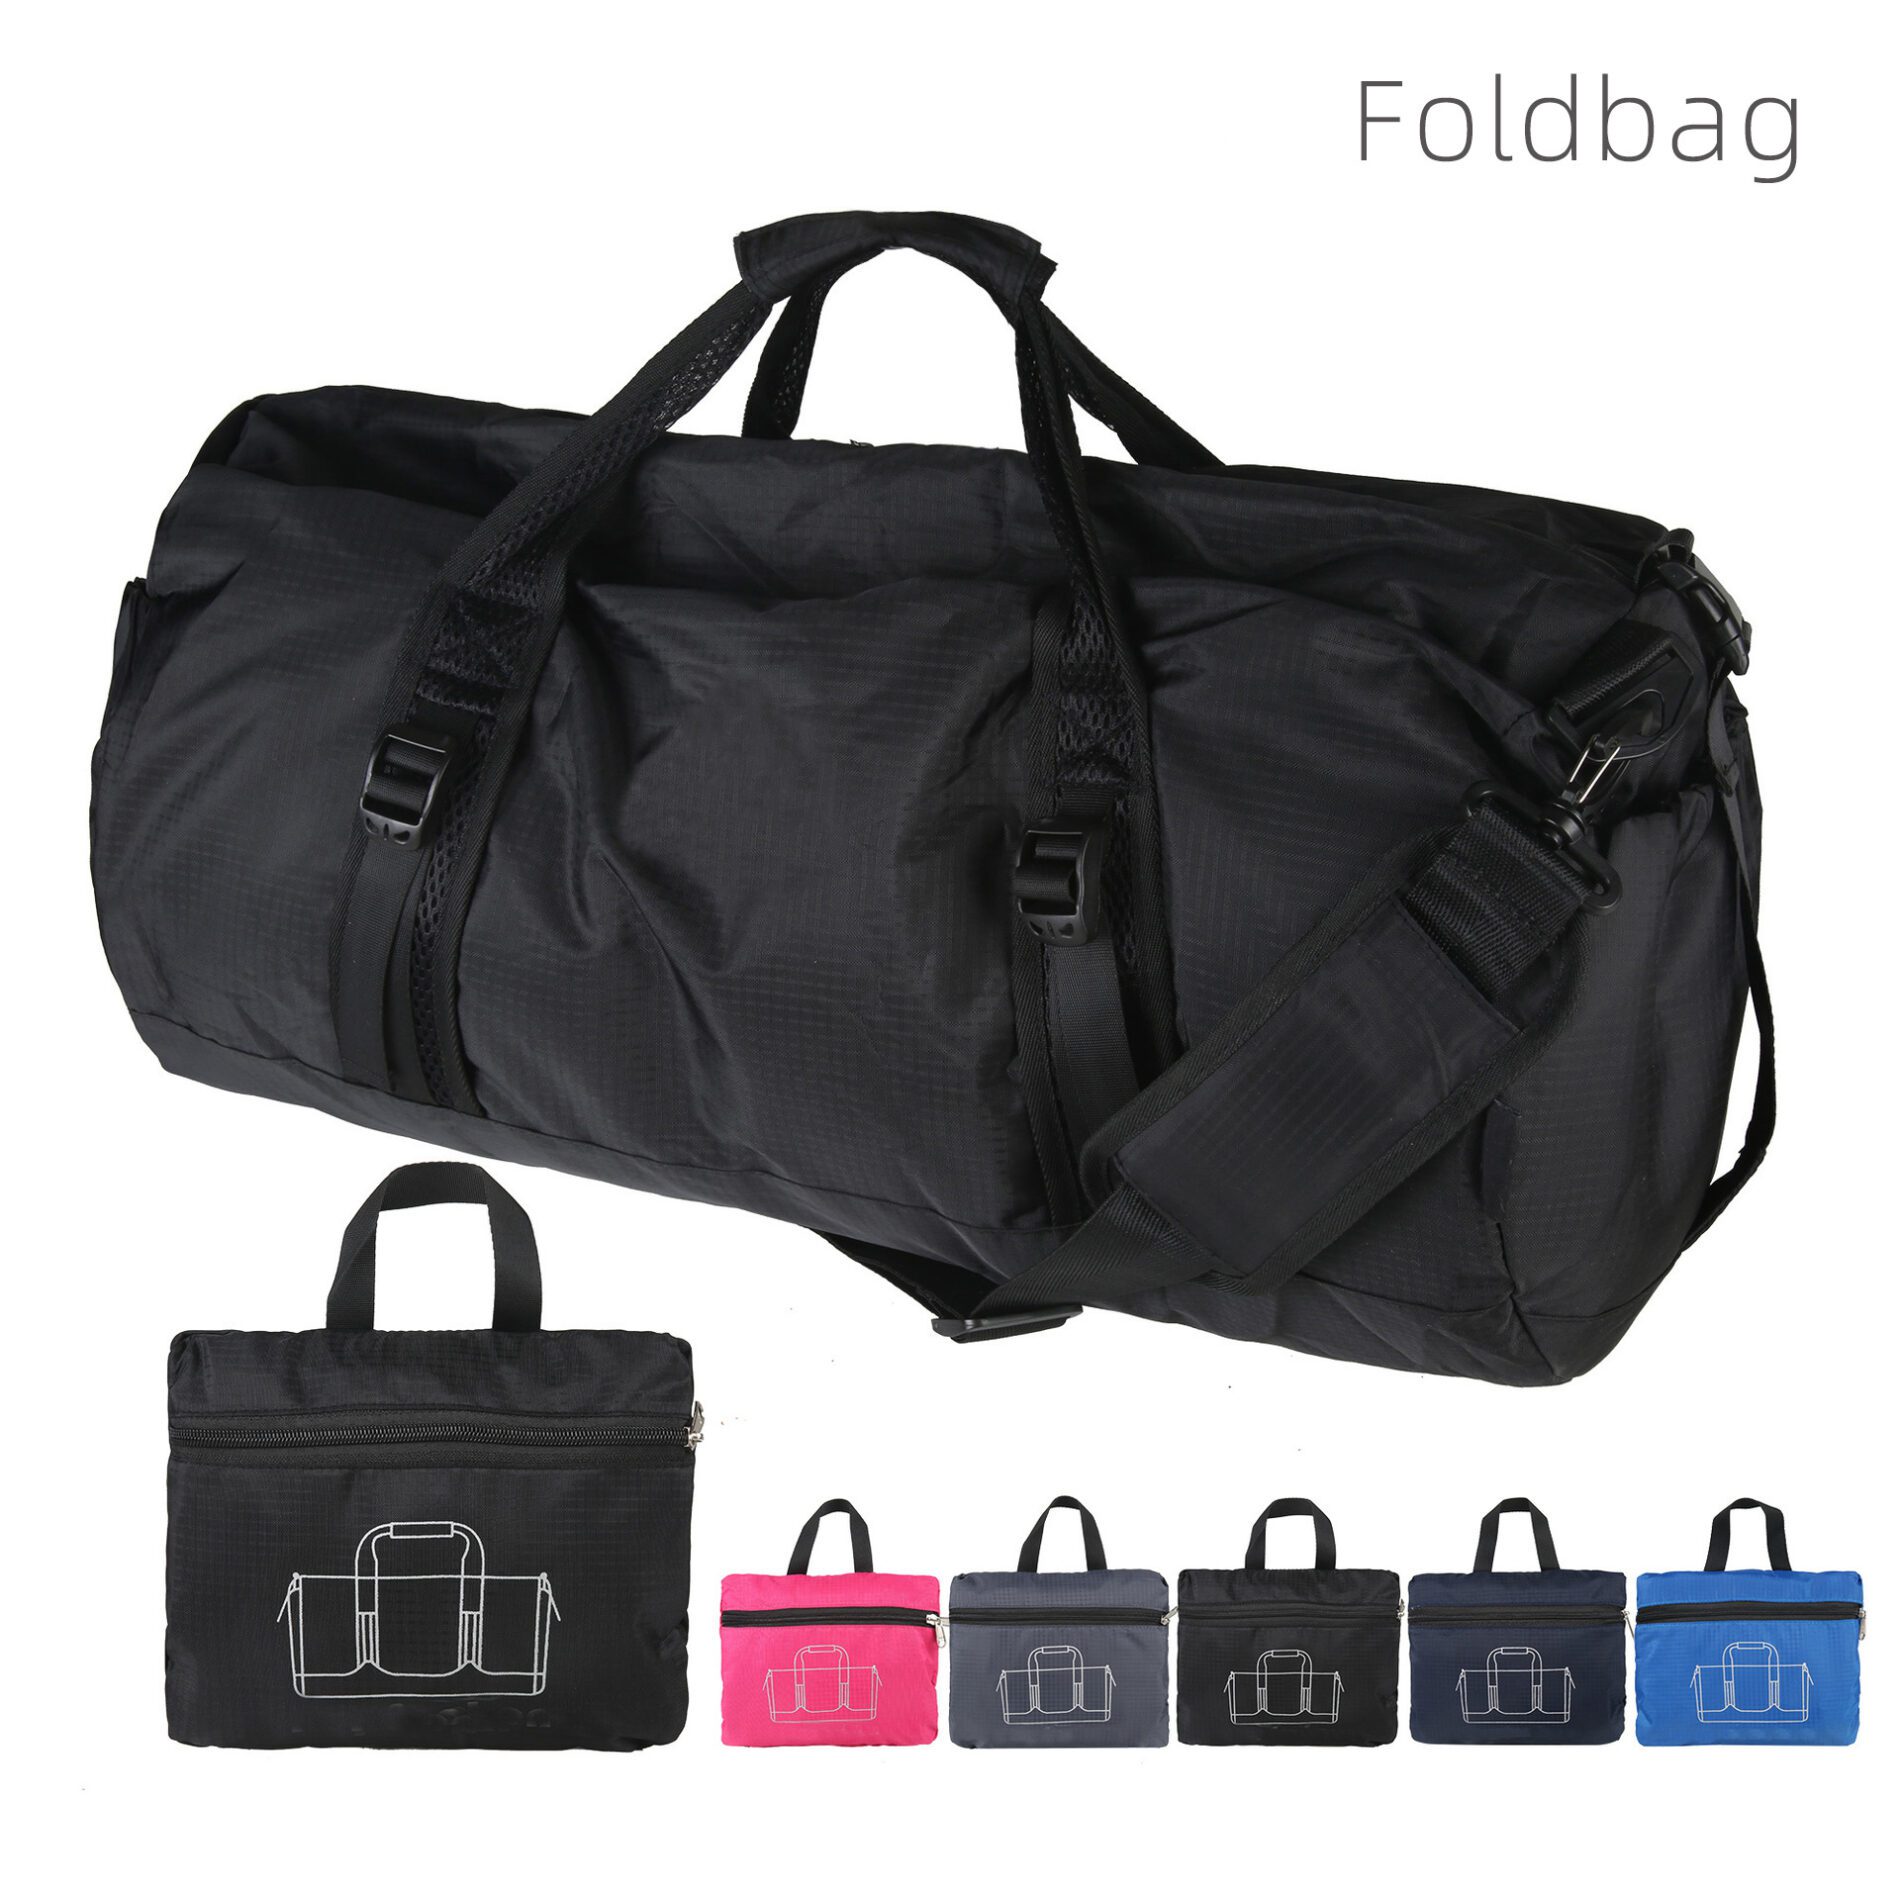 Foldable Duffle Gym Bag - With Company Logo Branding Option